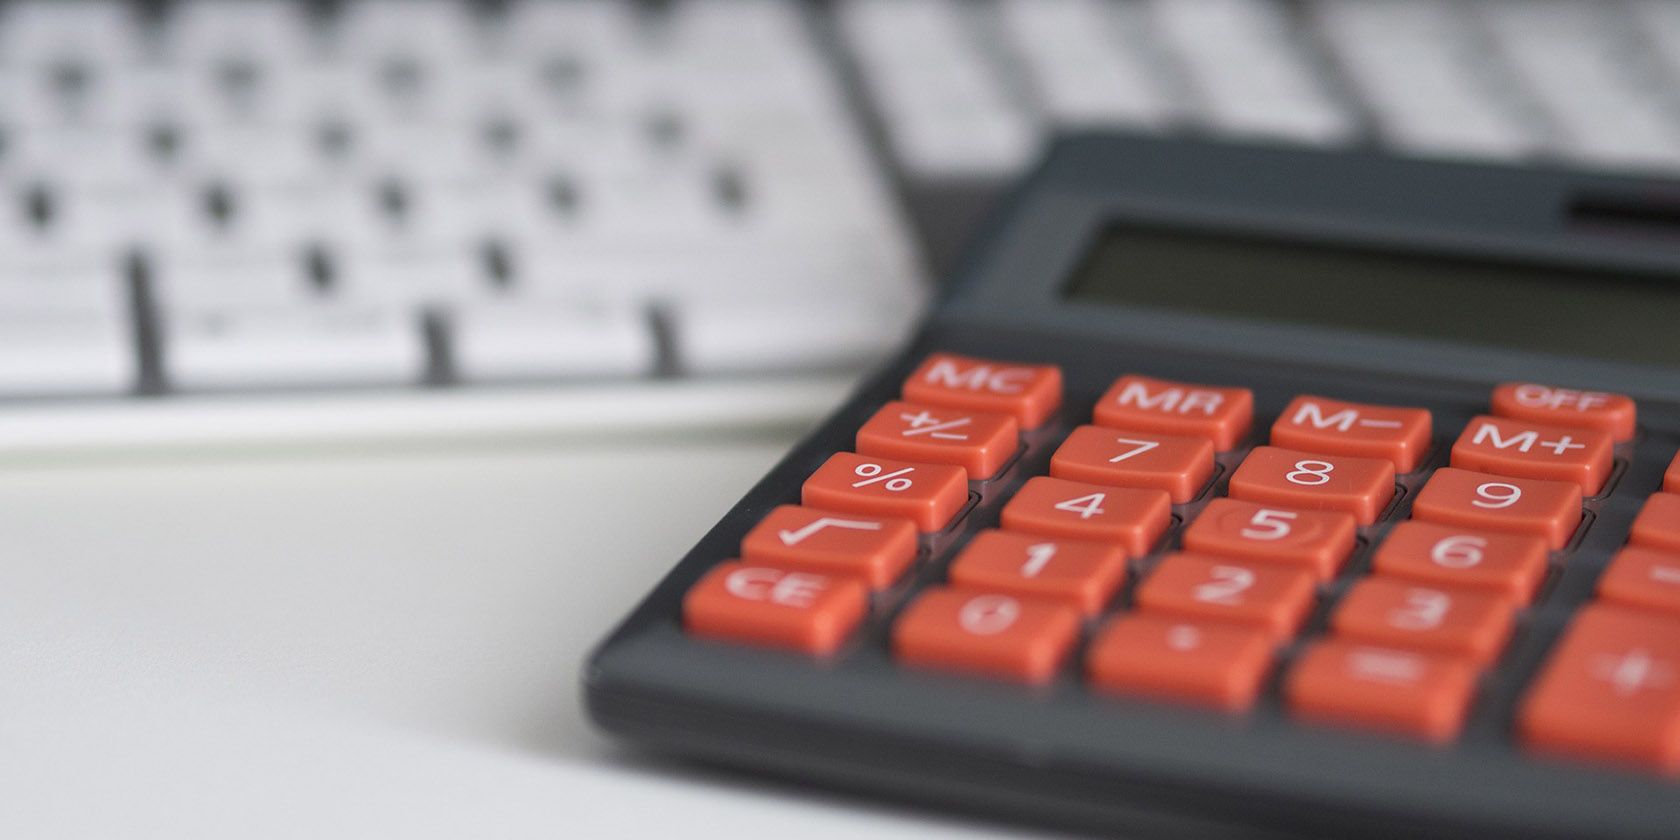 close up of calculator and keyboard